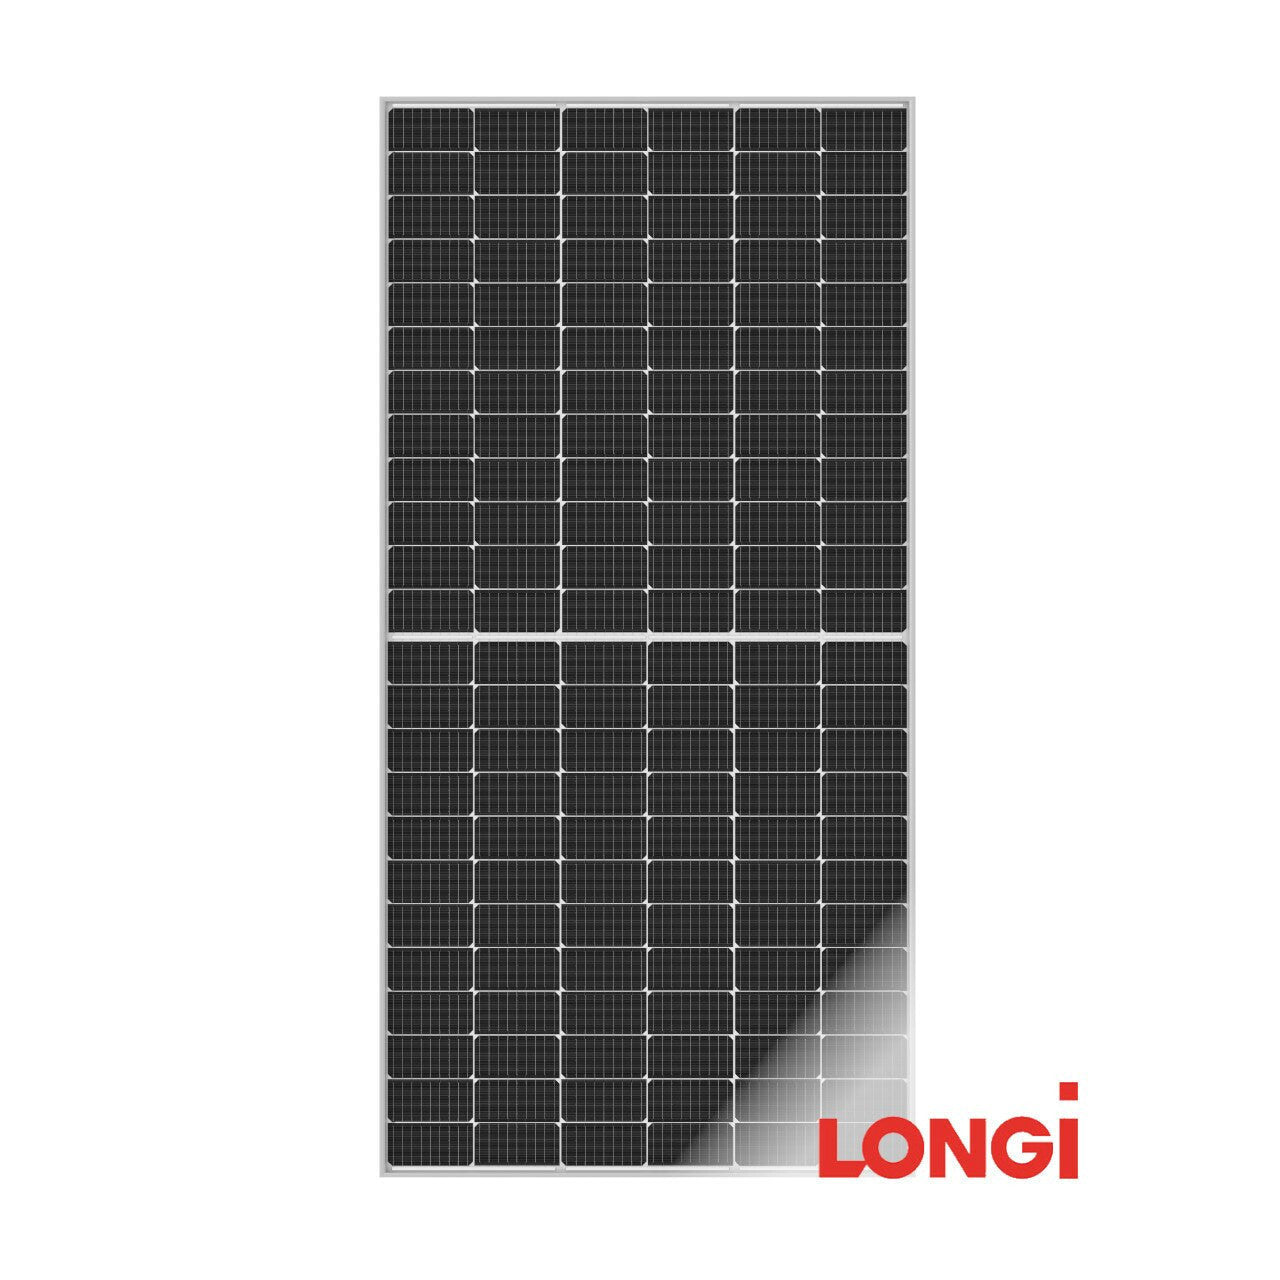 Longi - 31x Panels - 540W - LR5-72HBD-540M - Bifacial｜2-4 Weeks Ship Time